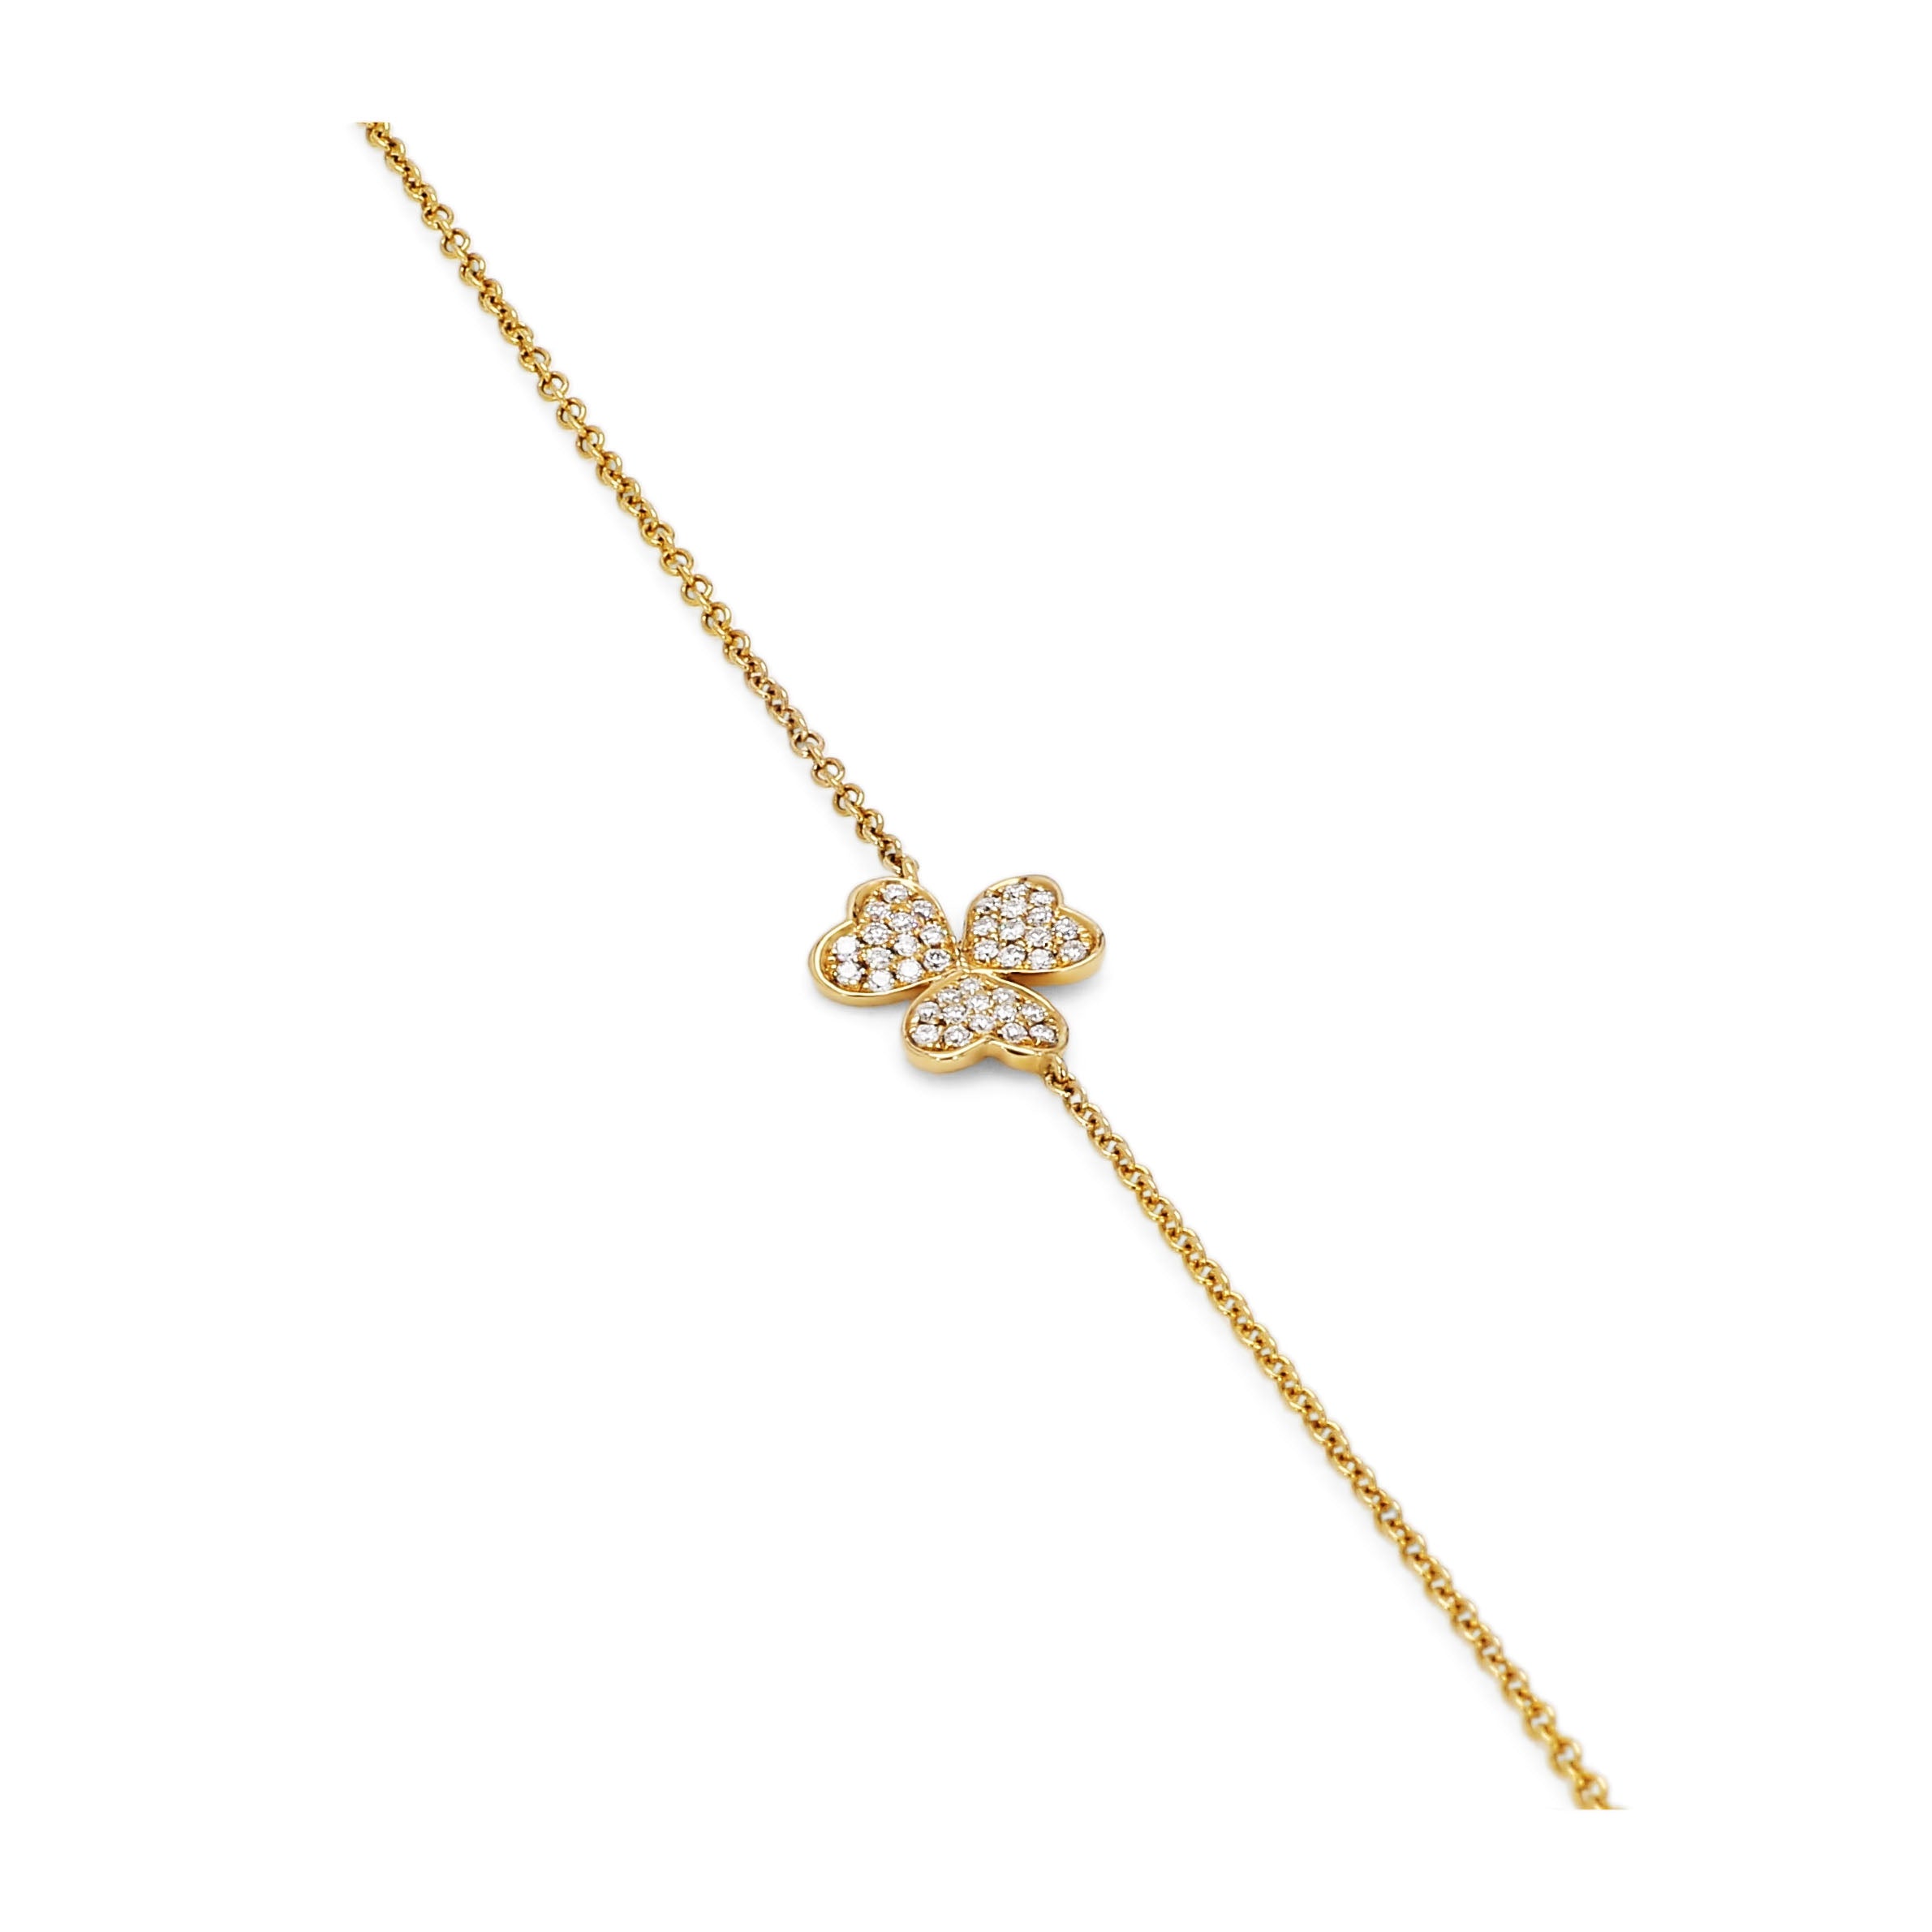 Adamar Jewels Shamrock Bracelet in 18K yellow gold set with diamonds